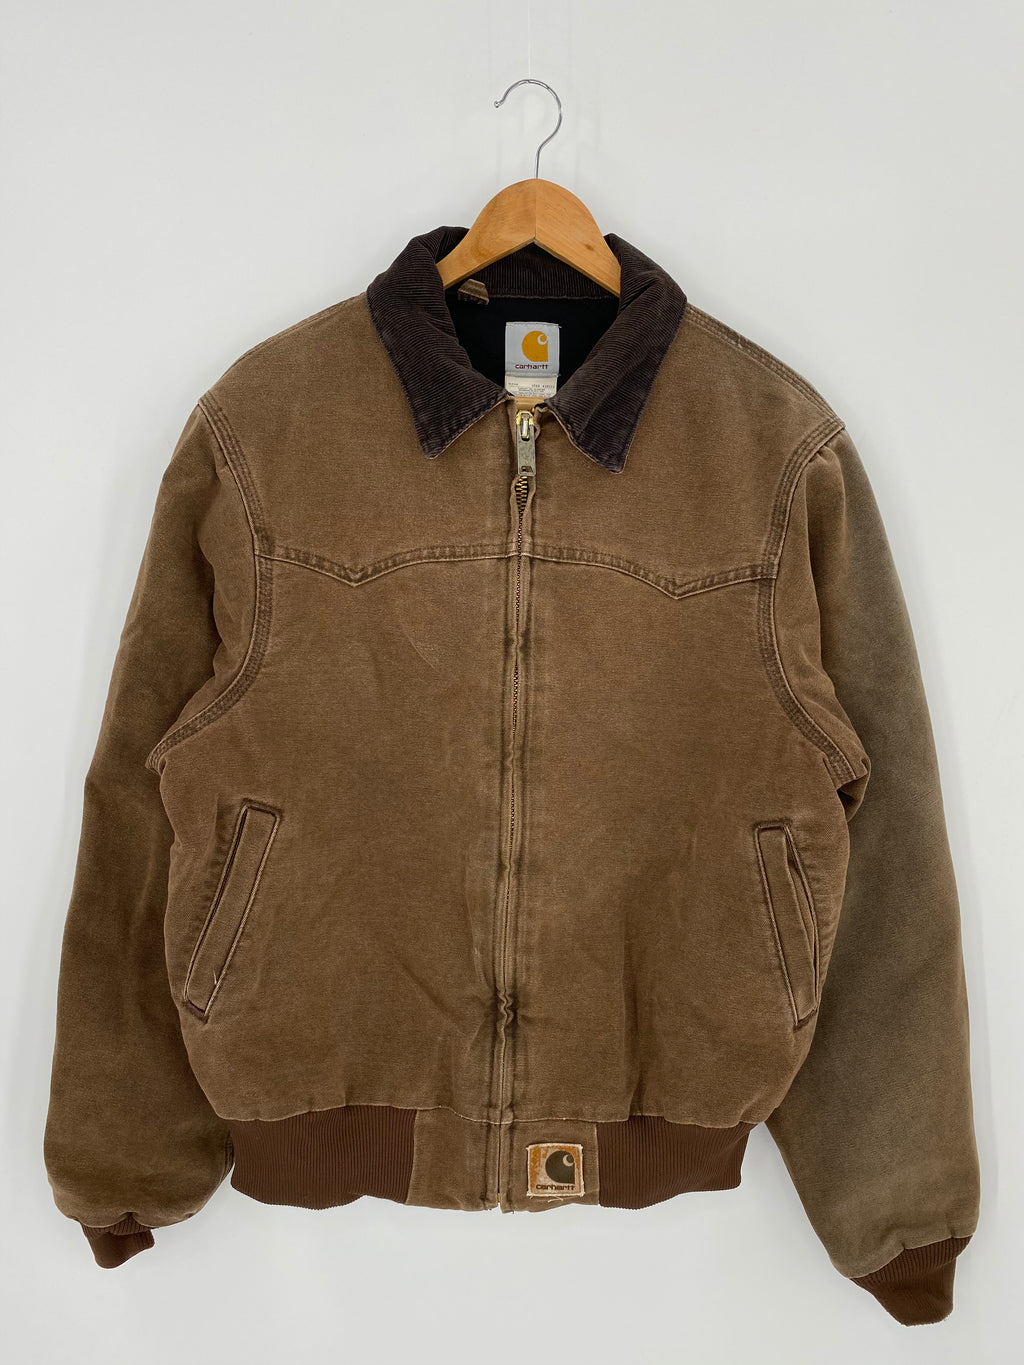 CARHARTT Size Approx. L Vintage Jacket / Y70